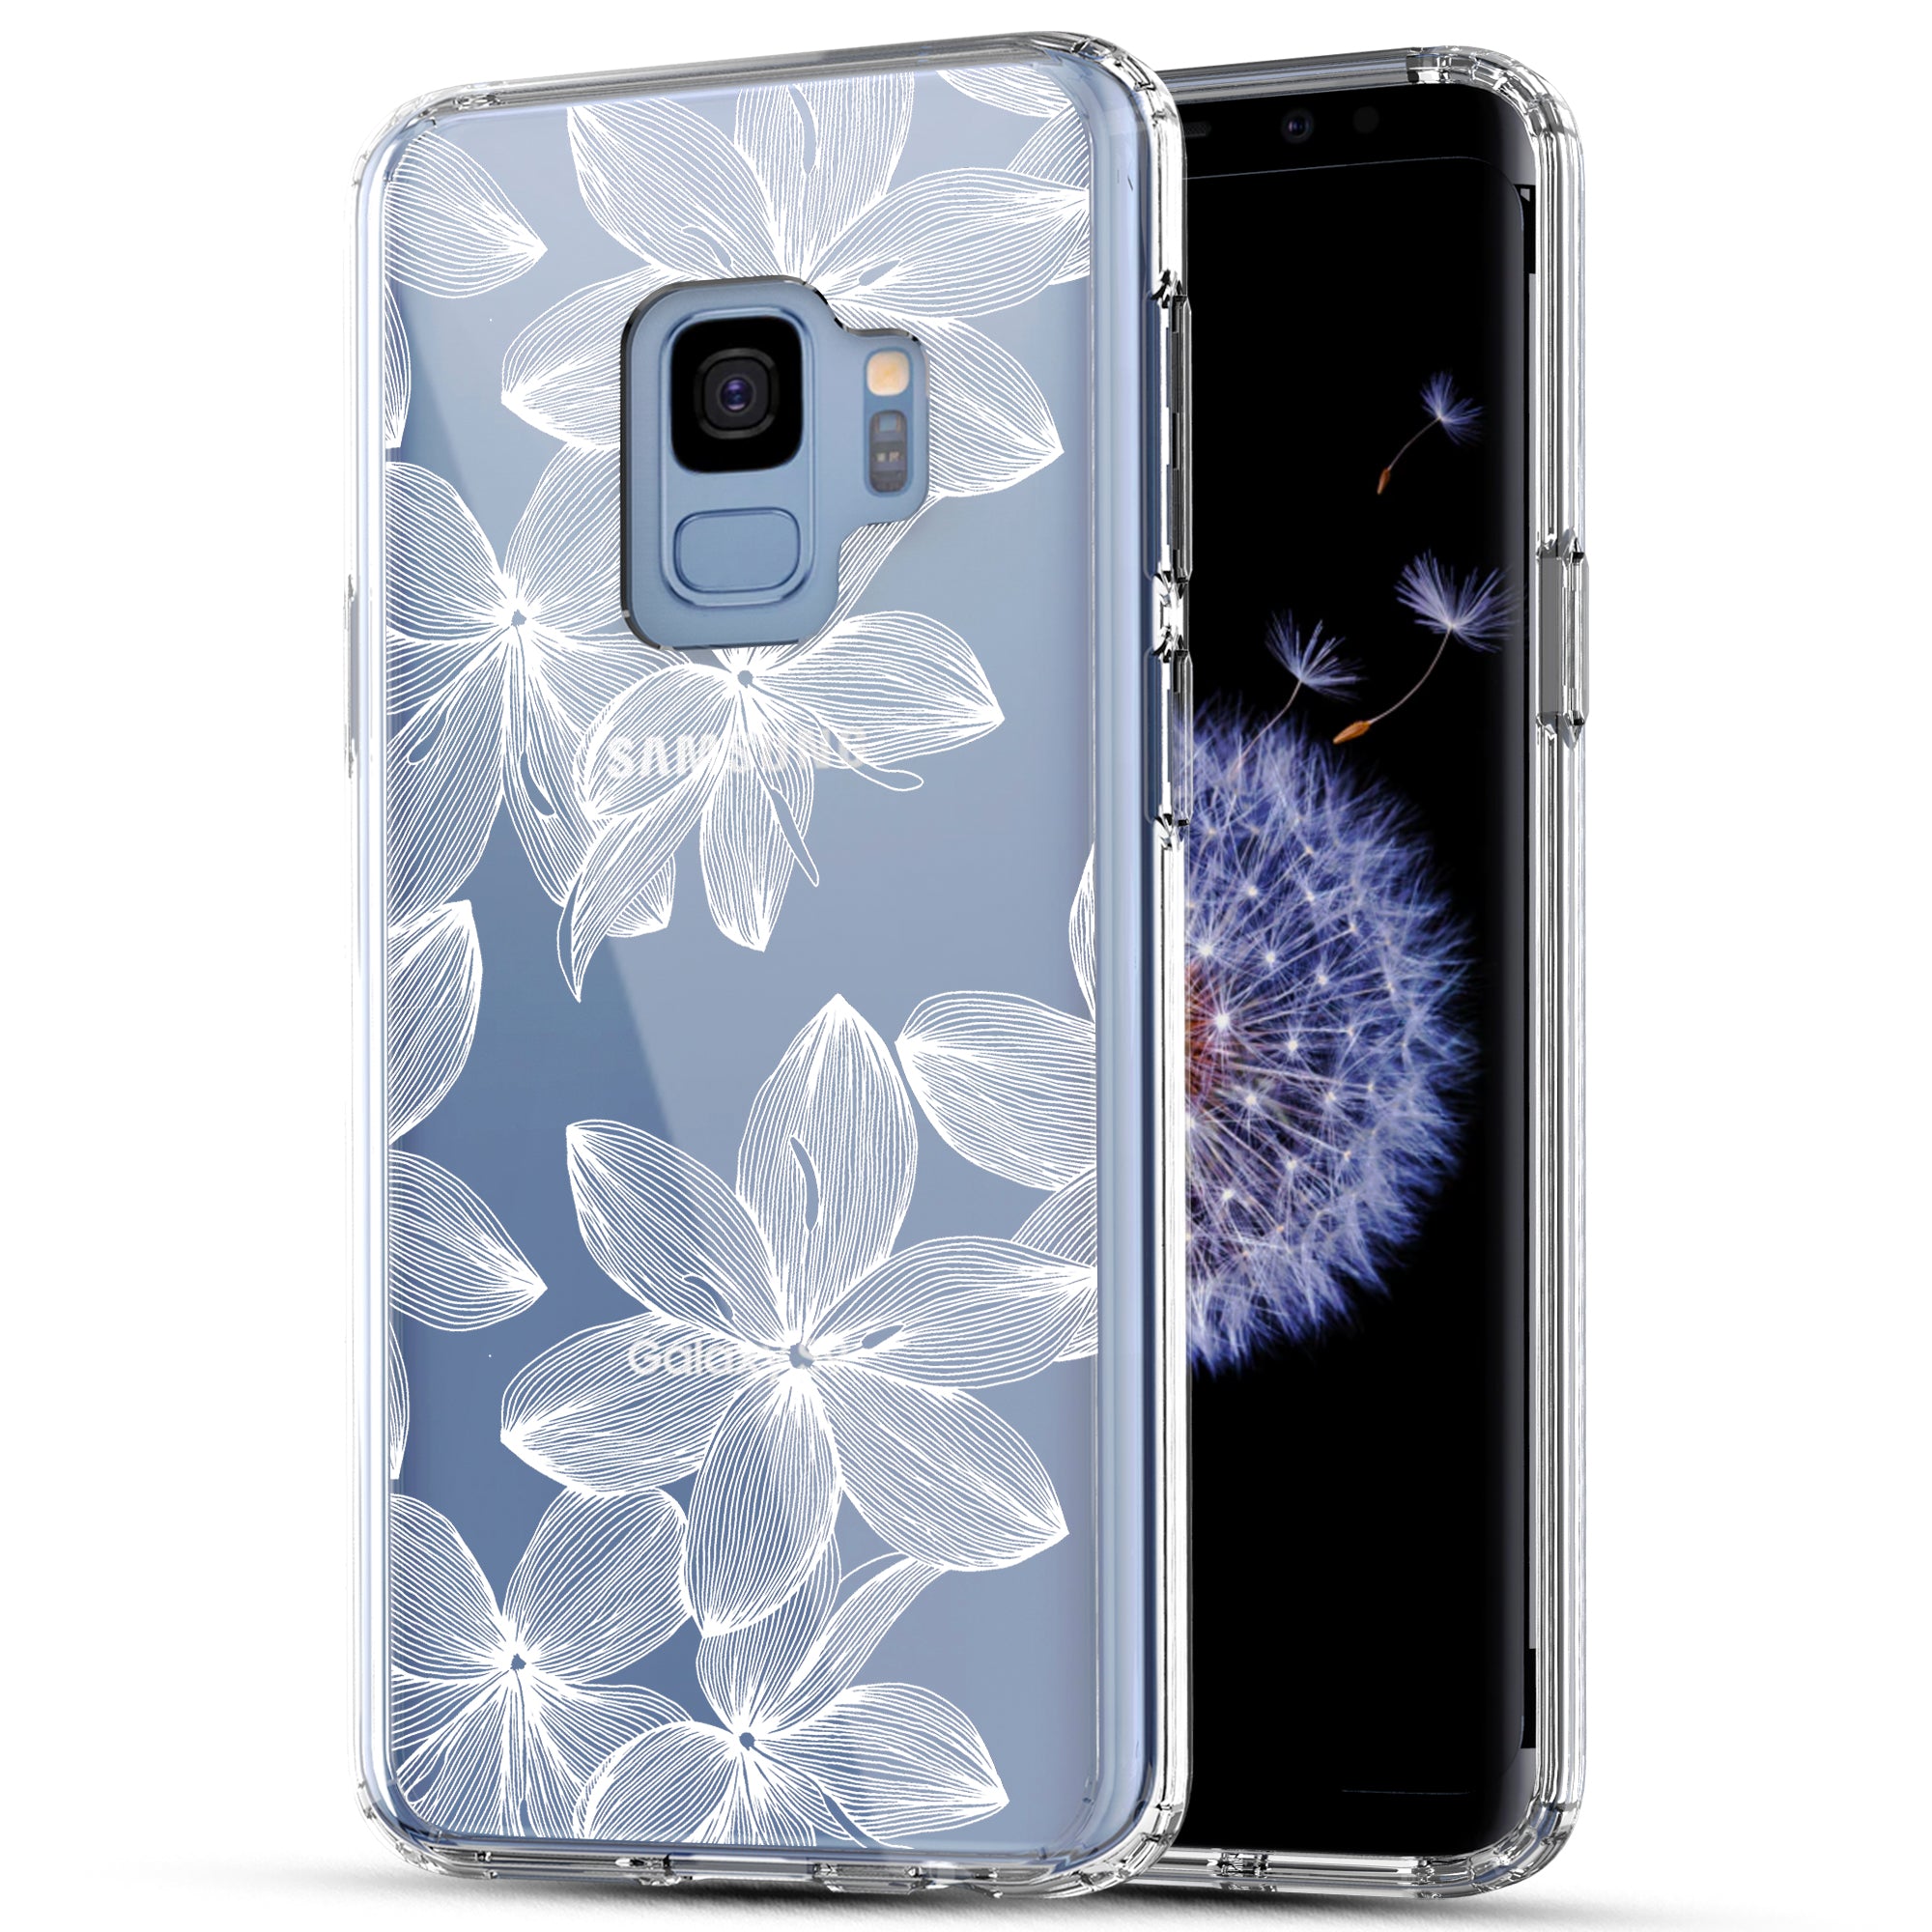 Samsung Galaxy S9 Case, Anti-Scratch Clear Case - White Flowers